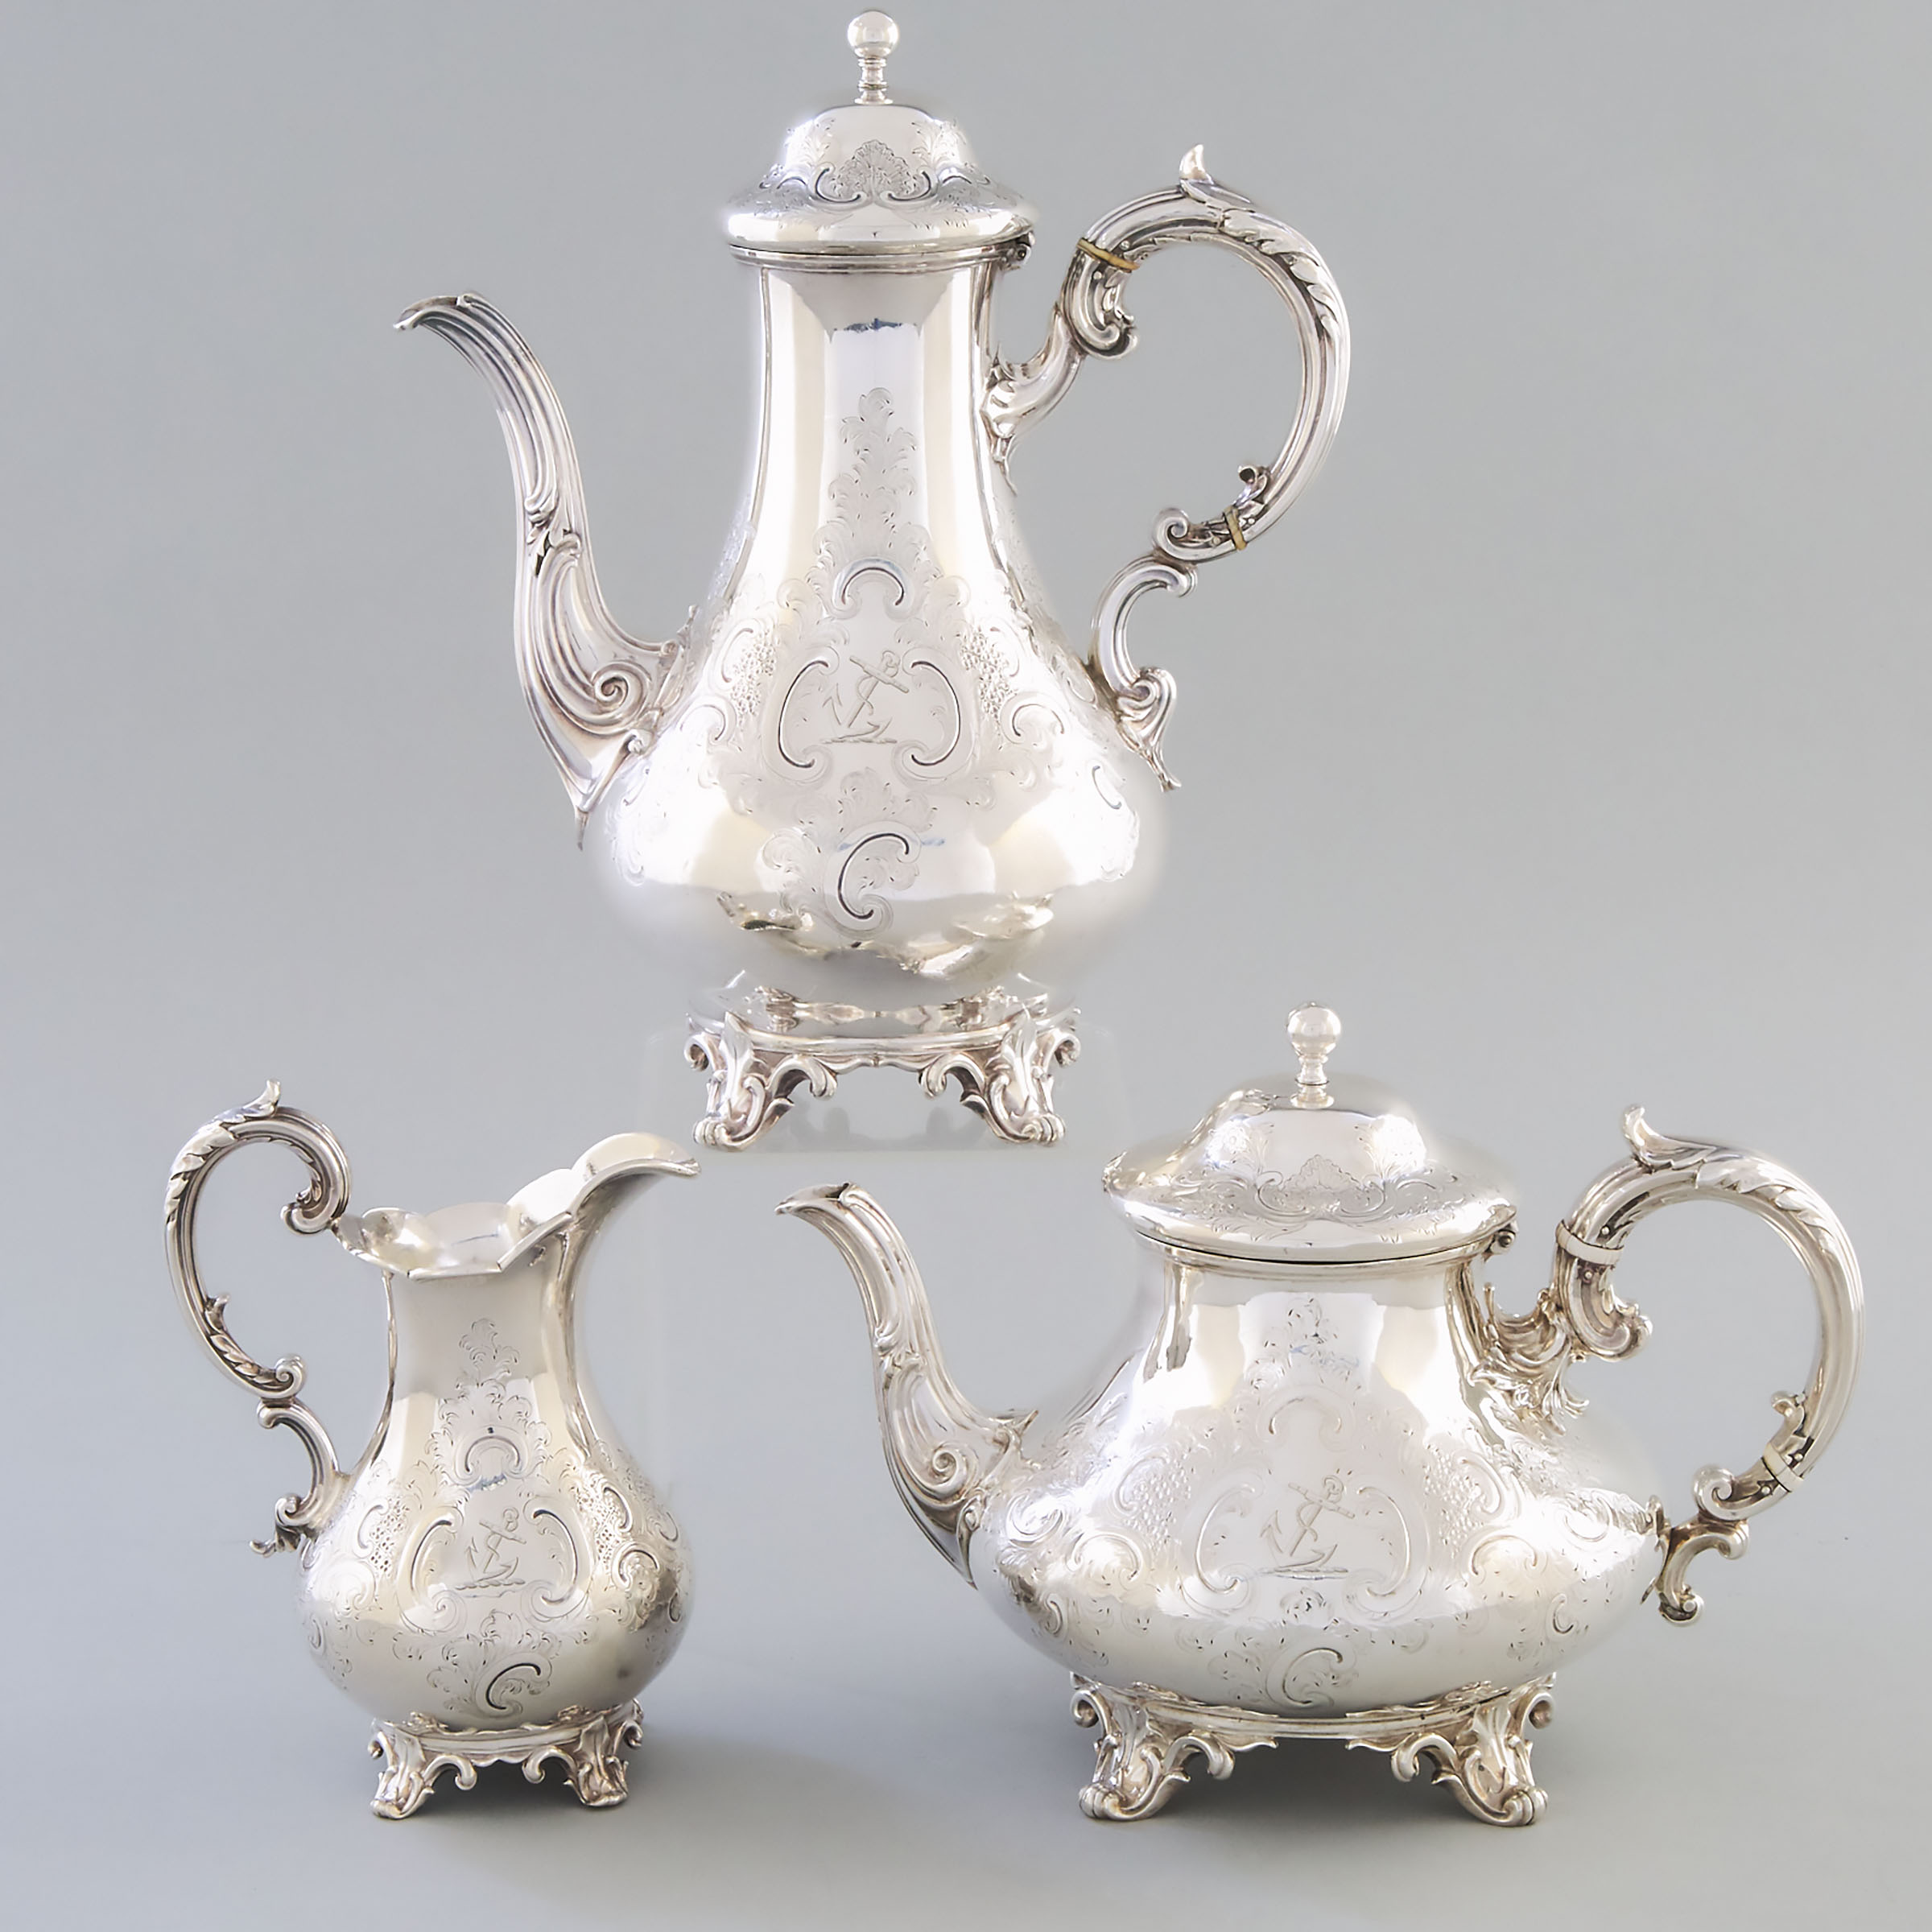 Victorian Silver Coffee Pot, Teapot and Cream Jug, Edward, John & William Barnard, London, 1849/50